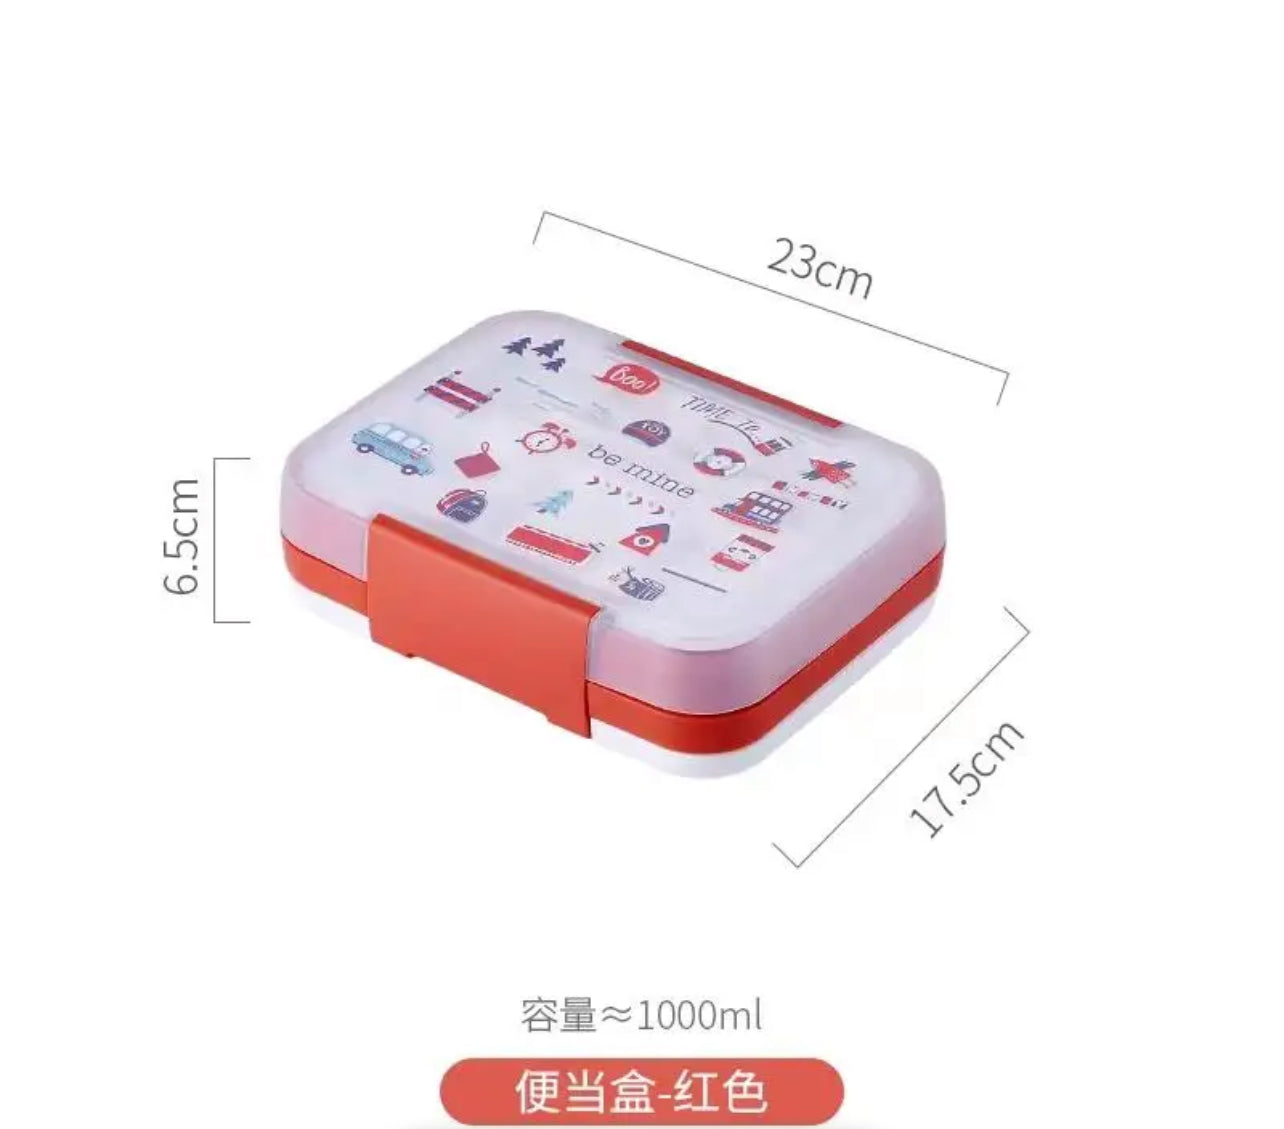 Transfer Proof Perfect Bento Snack Box - BPA Free